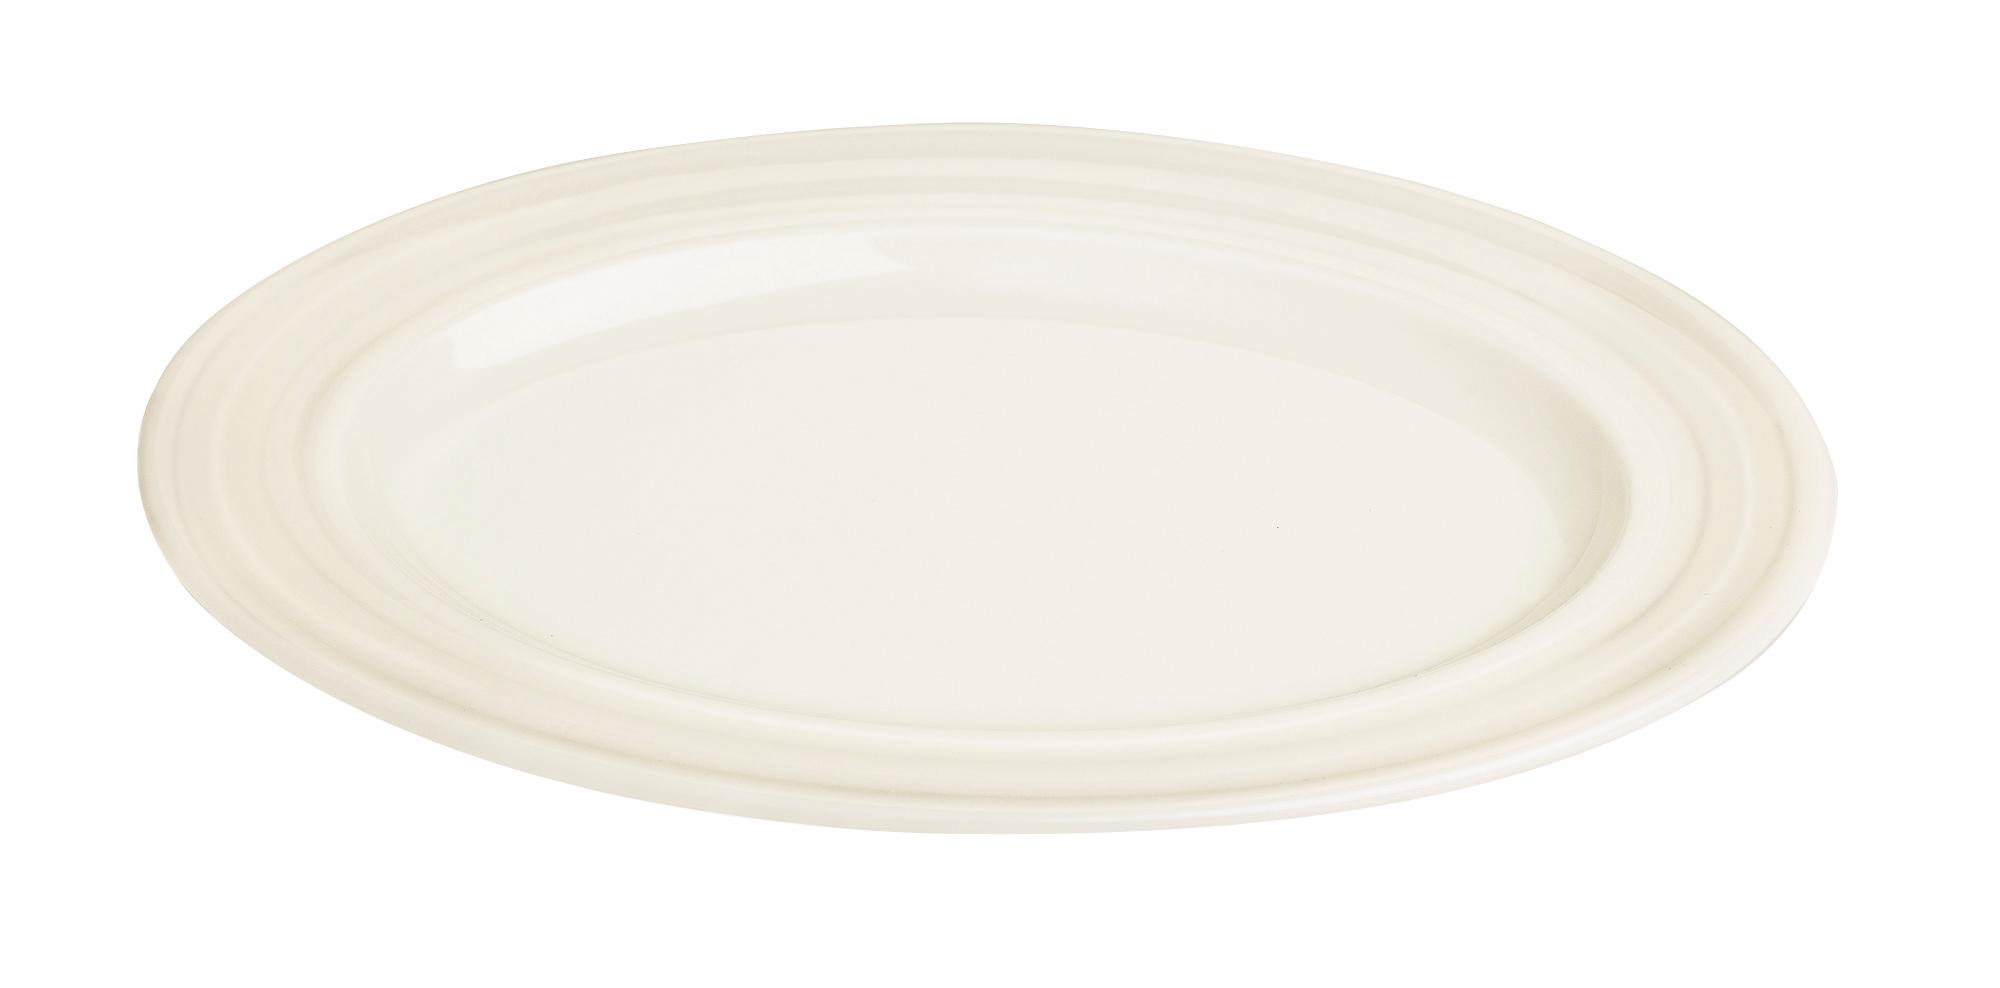 Perla flat plate, 240mm